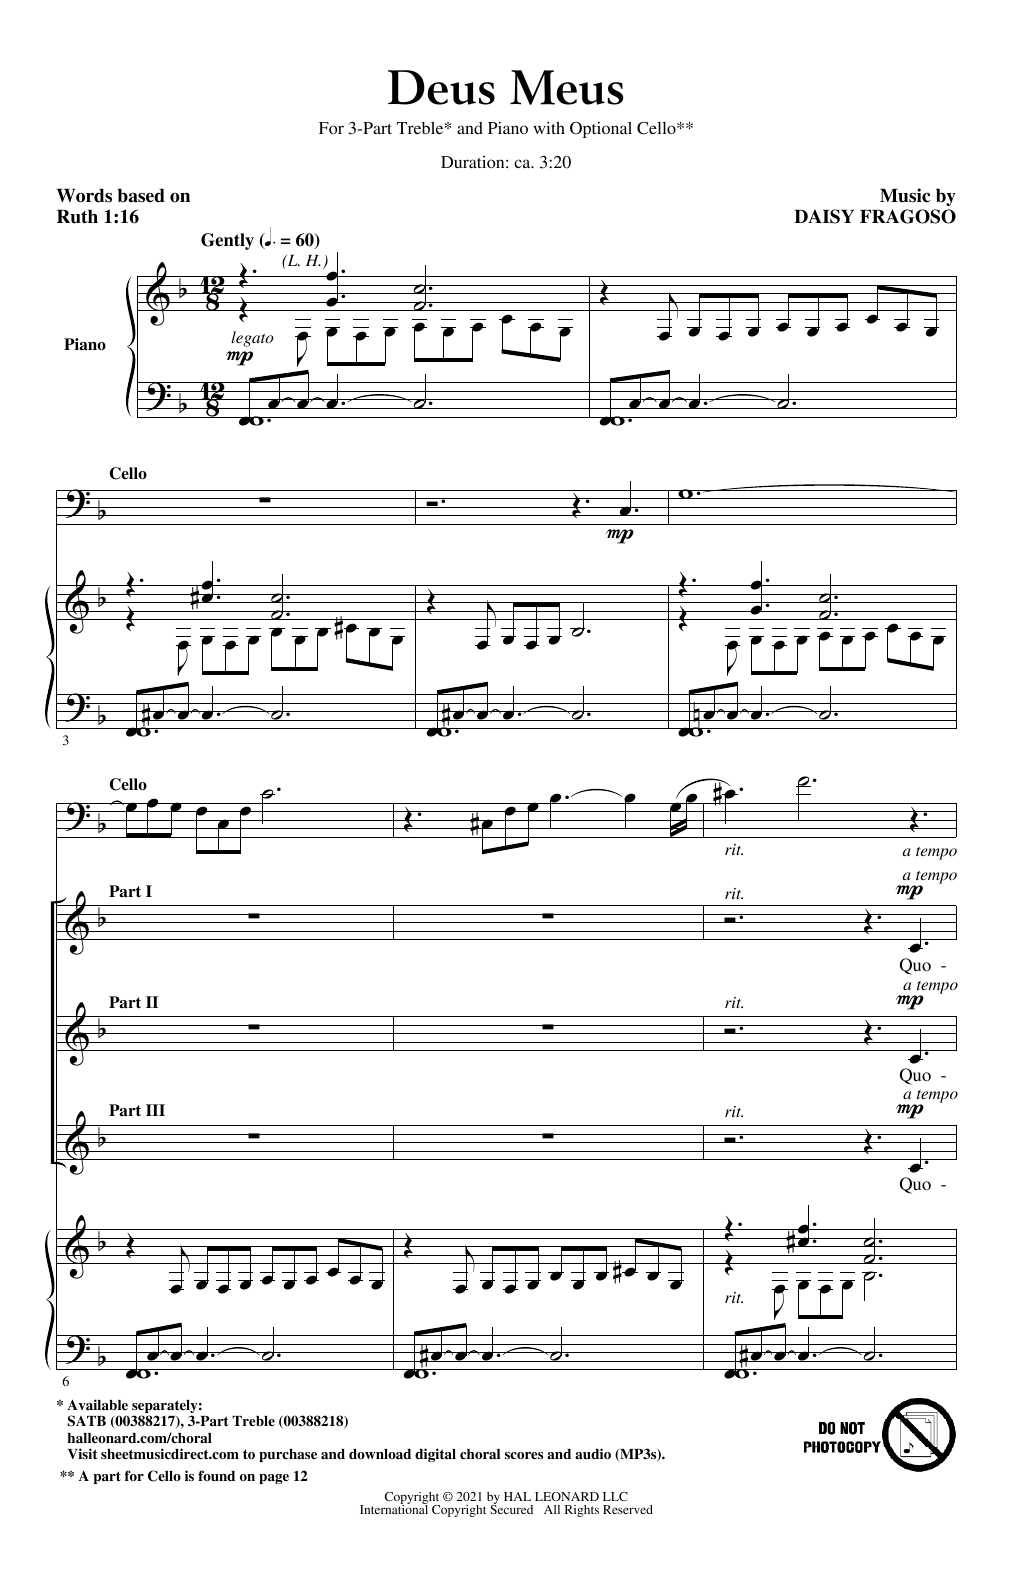 Daisy Fragoso Deus Meus sheet music notes and chords arranged for 3-Part Treble Choir